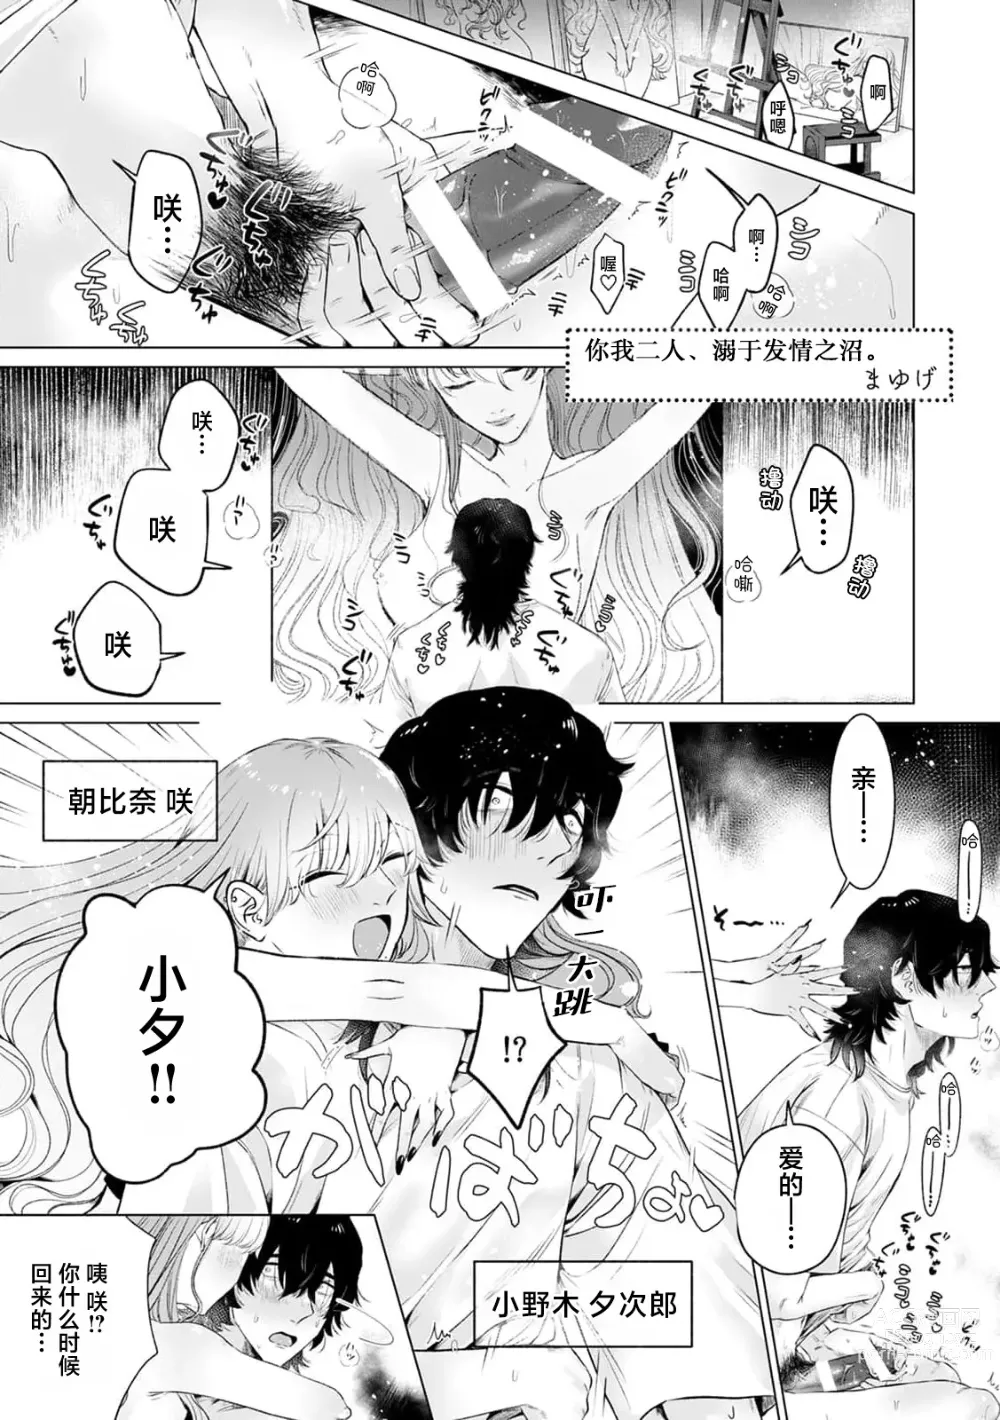 Page 2 of manga 你我二人、深陷发情之沼。